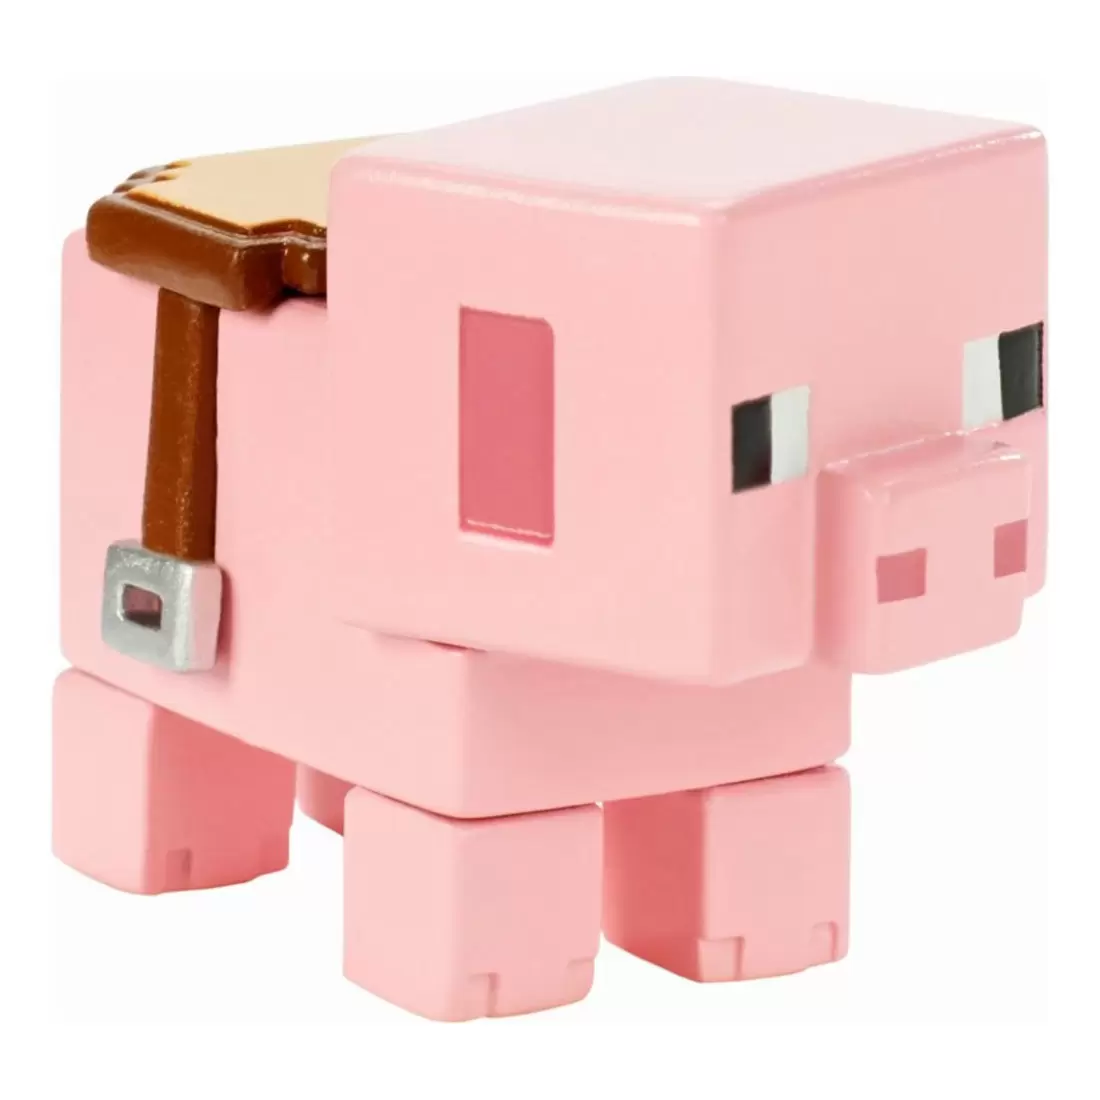 Minecraft Mini Figures Series 11 - Pig